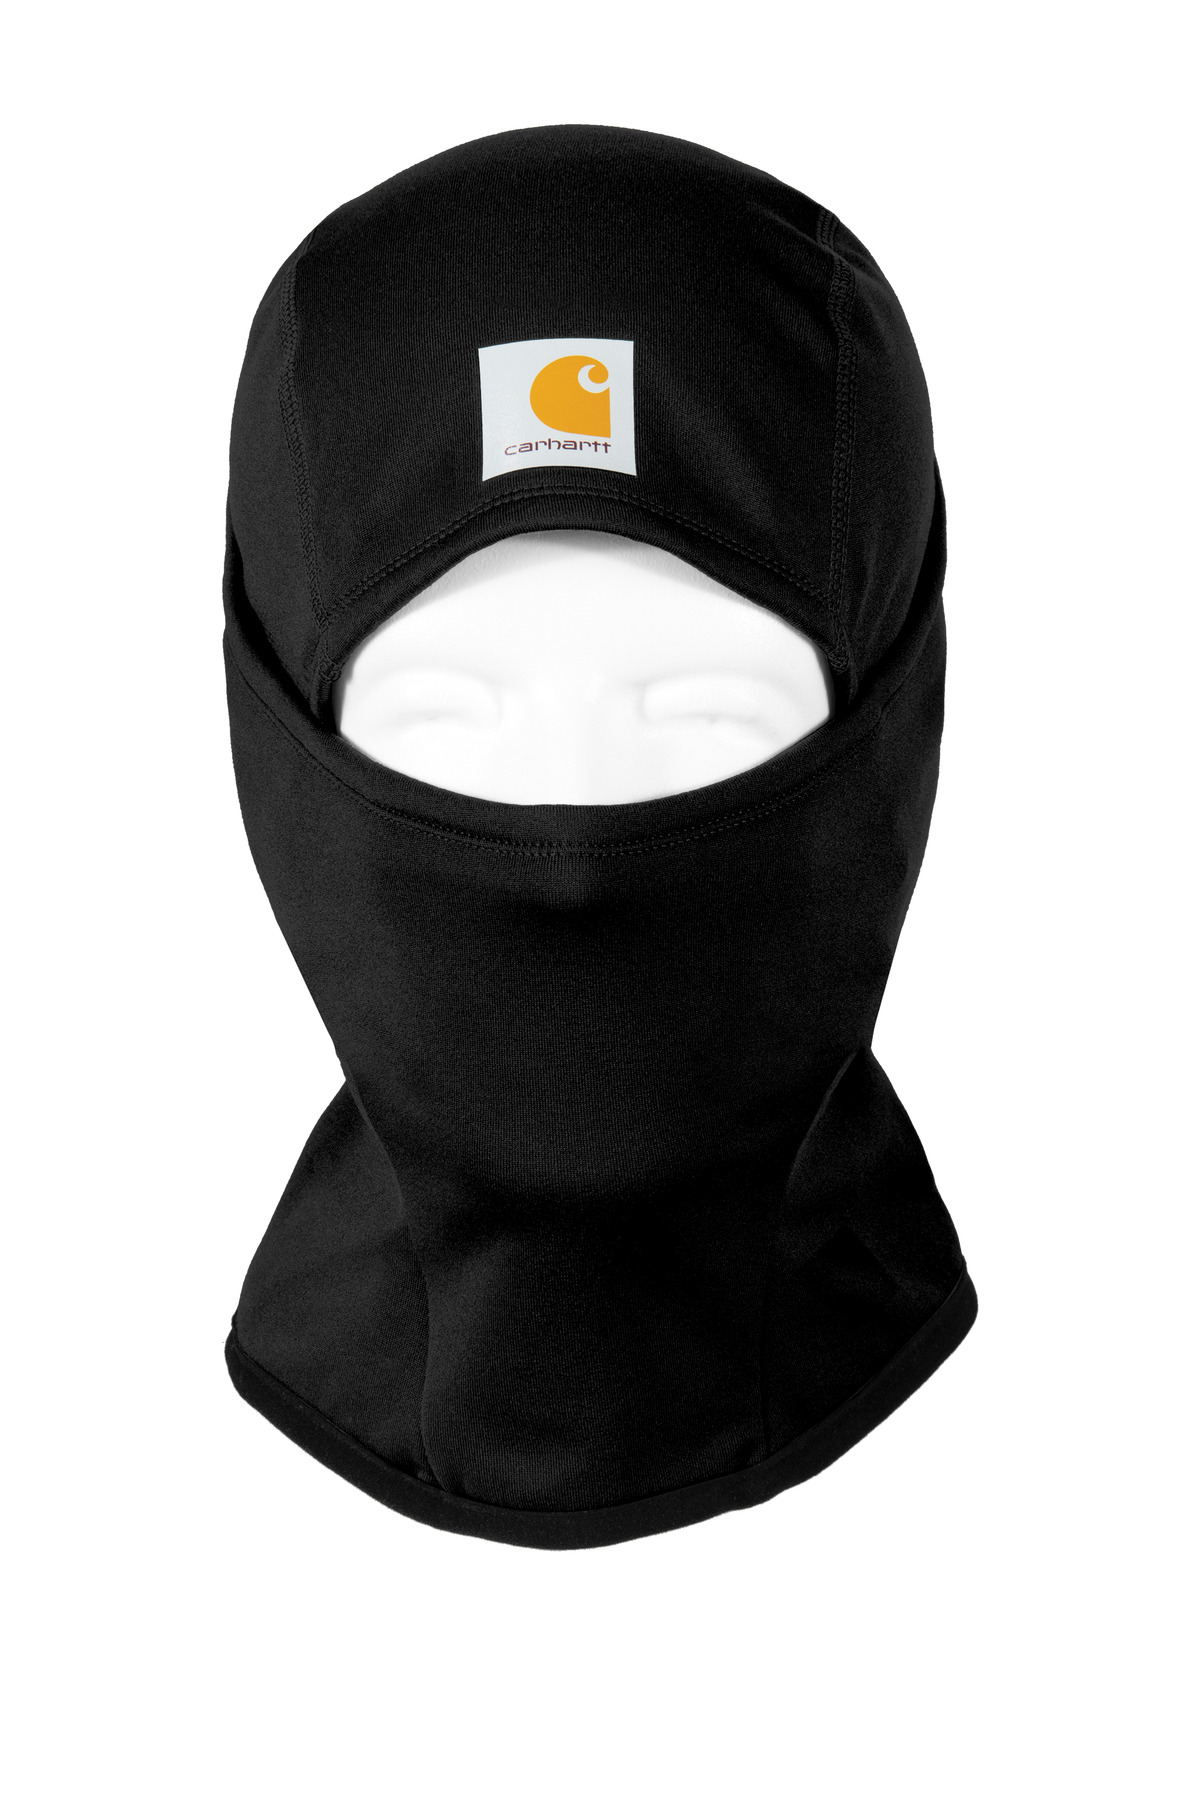 Carhartt Force Helmet-Liner Mask-